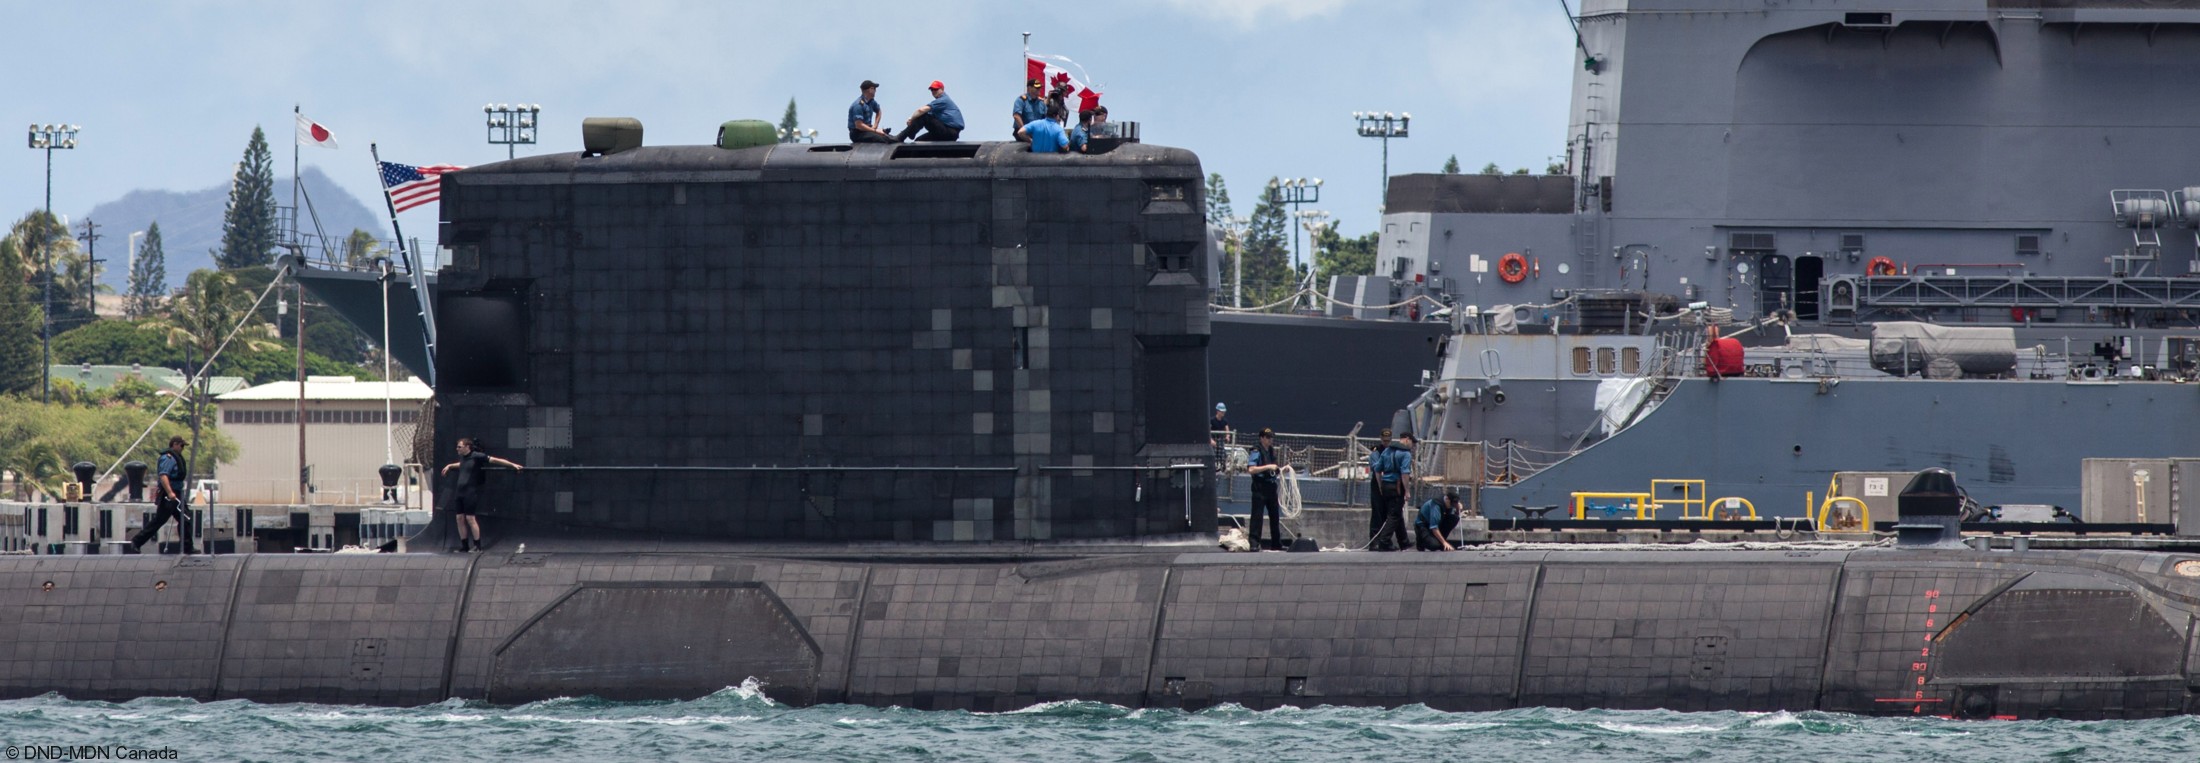 ssk-876 hmcs victoria upholder class attack submarine hunter killer ncsm royal canadian navy 42 pearl harbor hickam hawaii